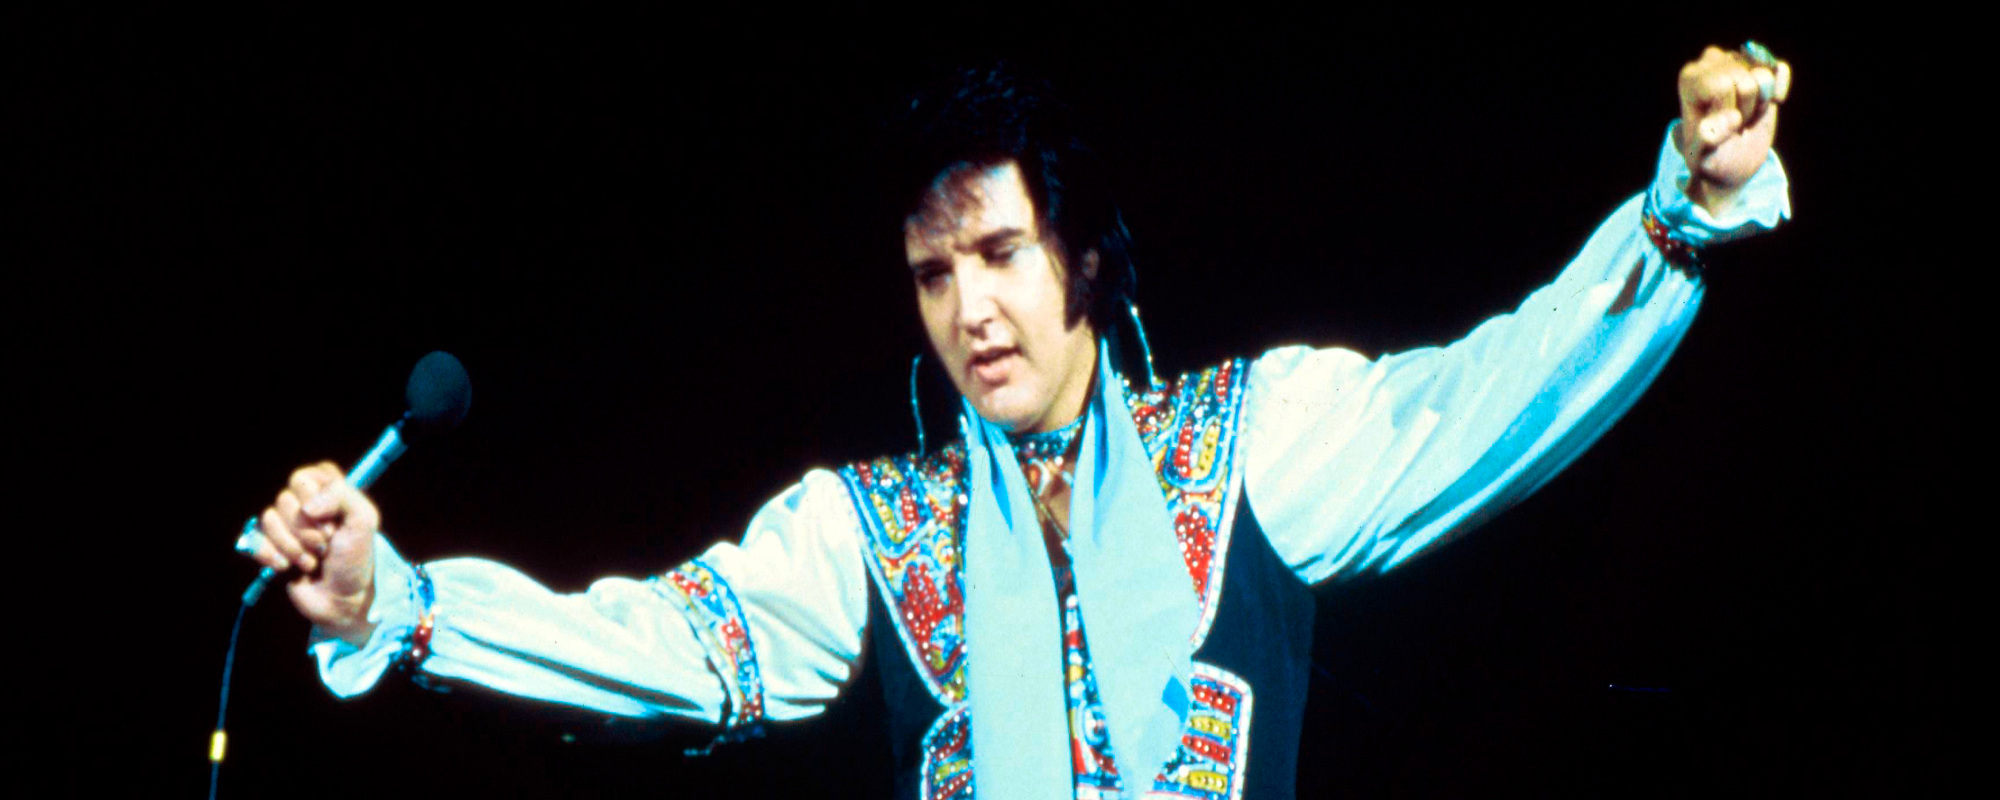 Elvis Presley Enterprises Bans The King’s Music from ‘Priscilla’